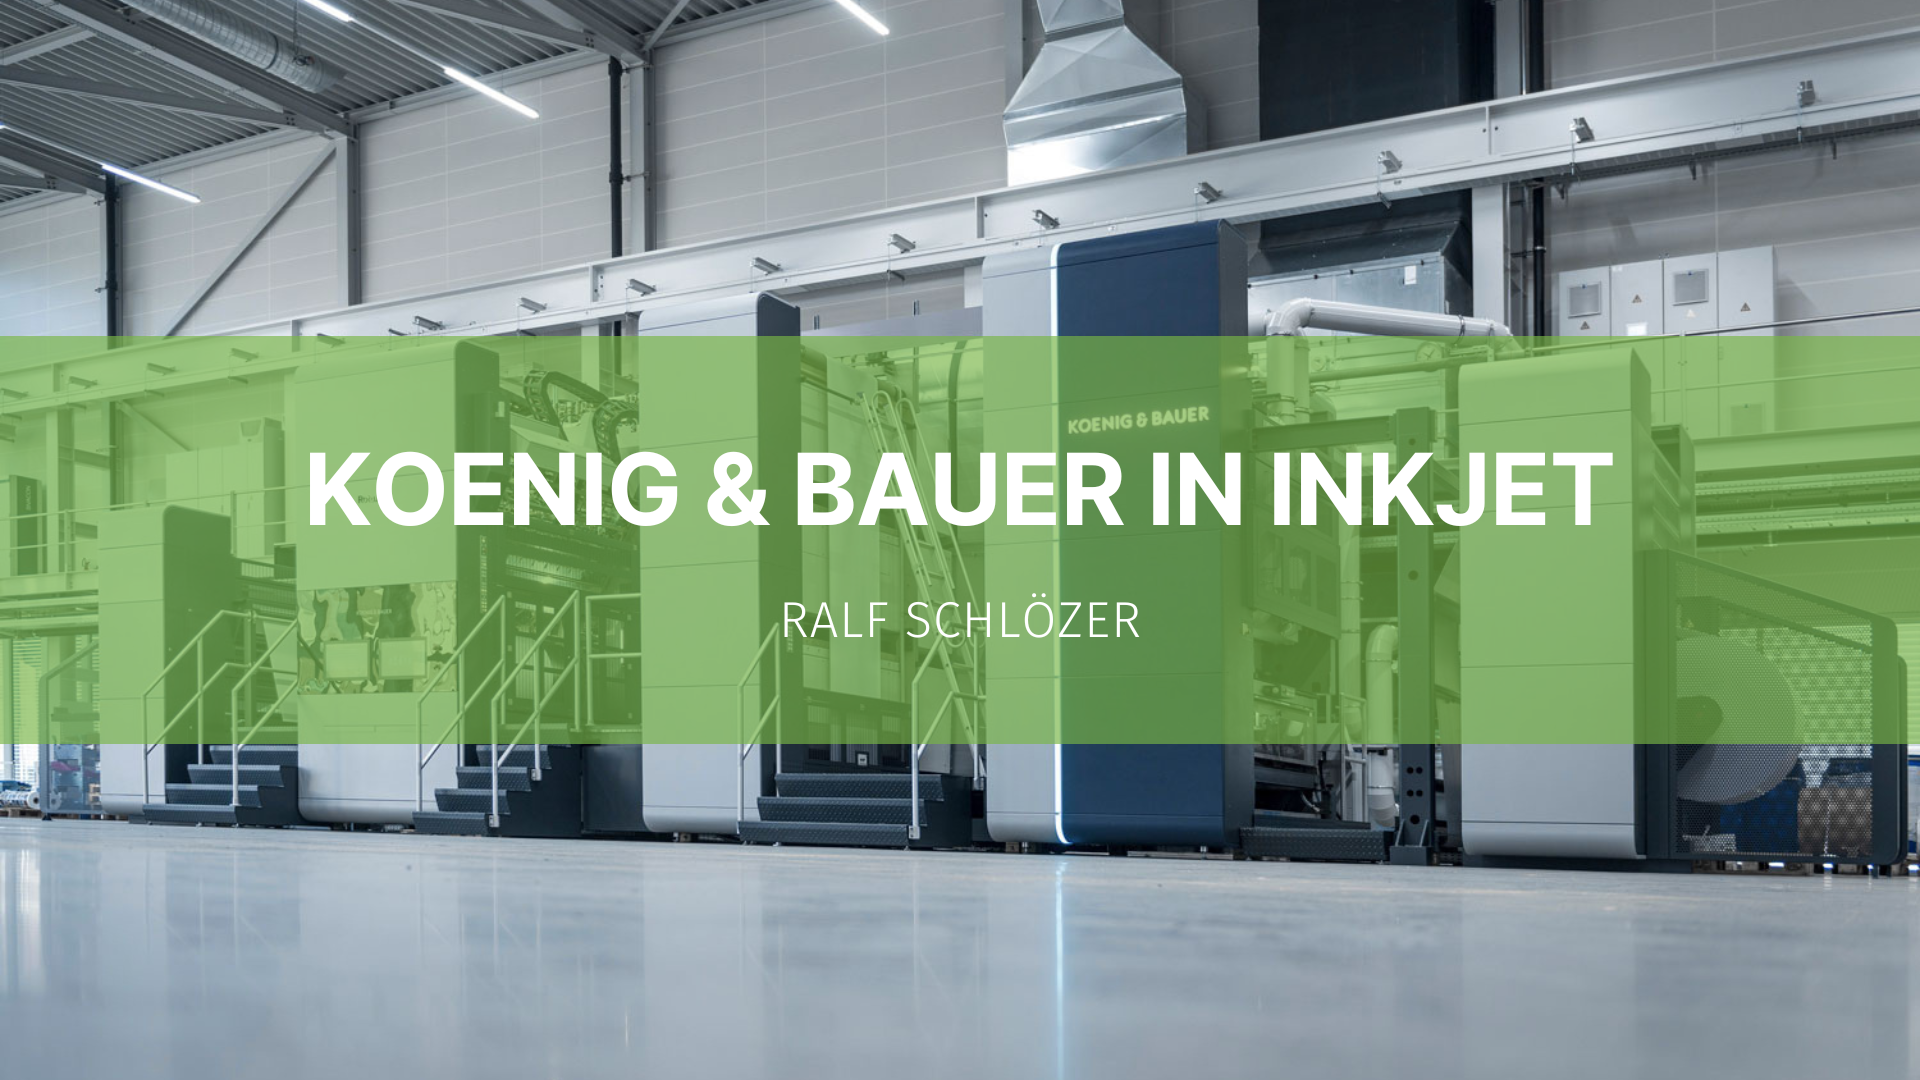 Featured image for “Koenig & Bauer in Inkjet”